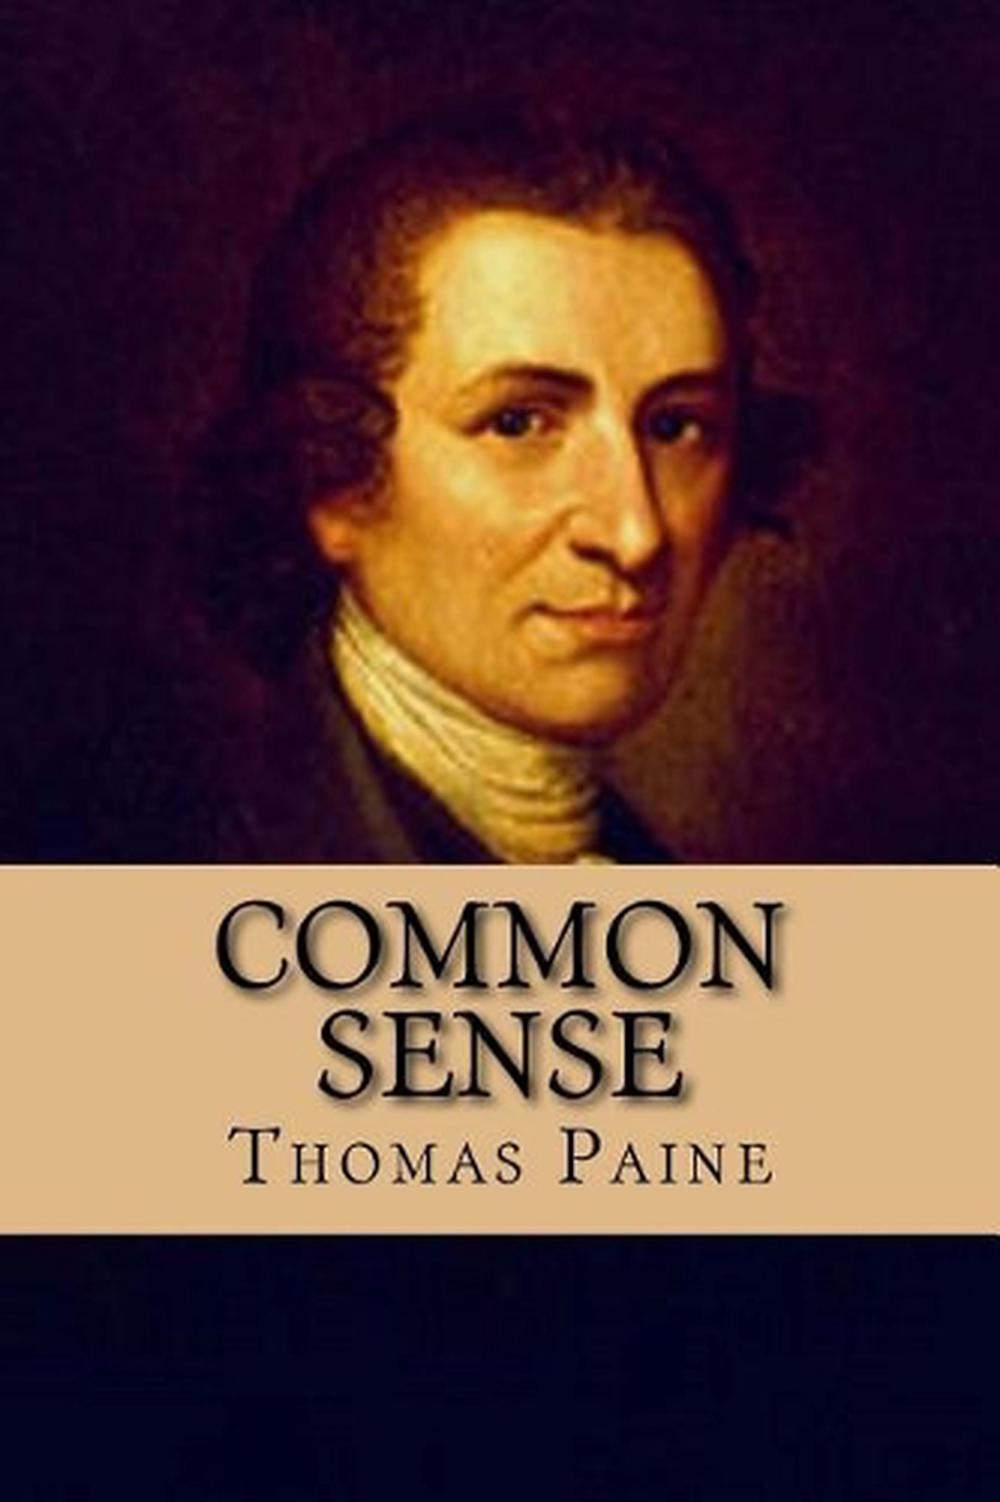 common sense by thomas paine essay